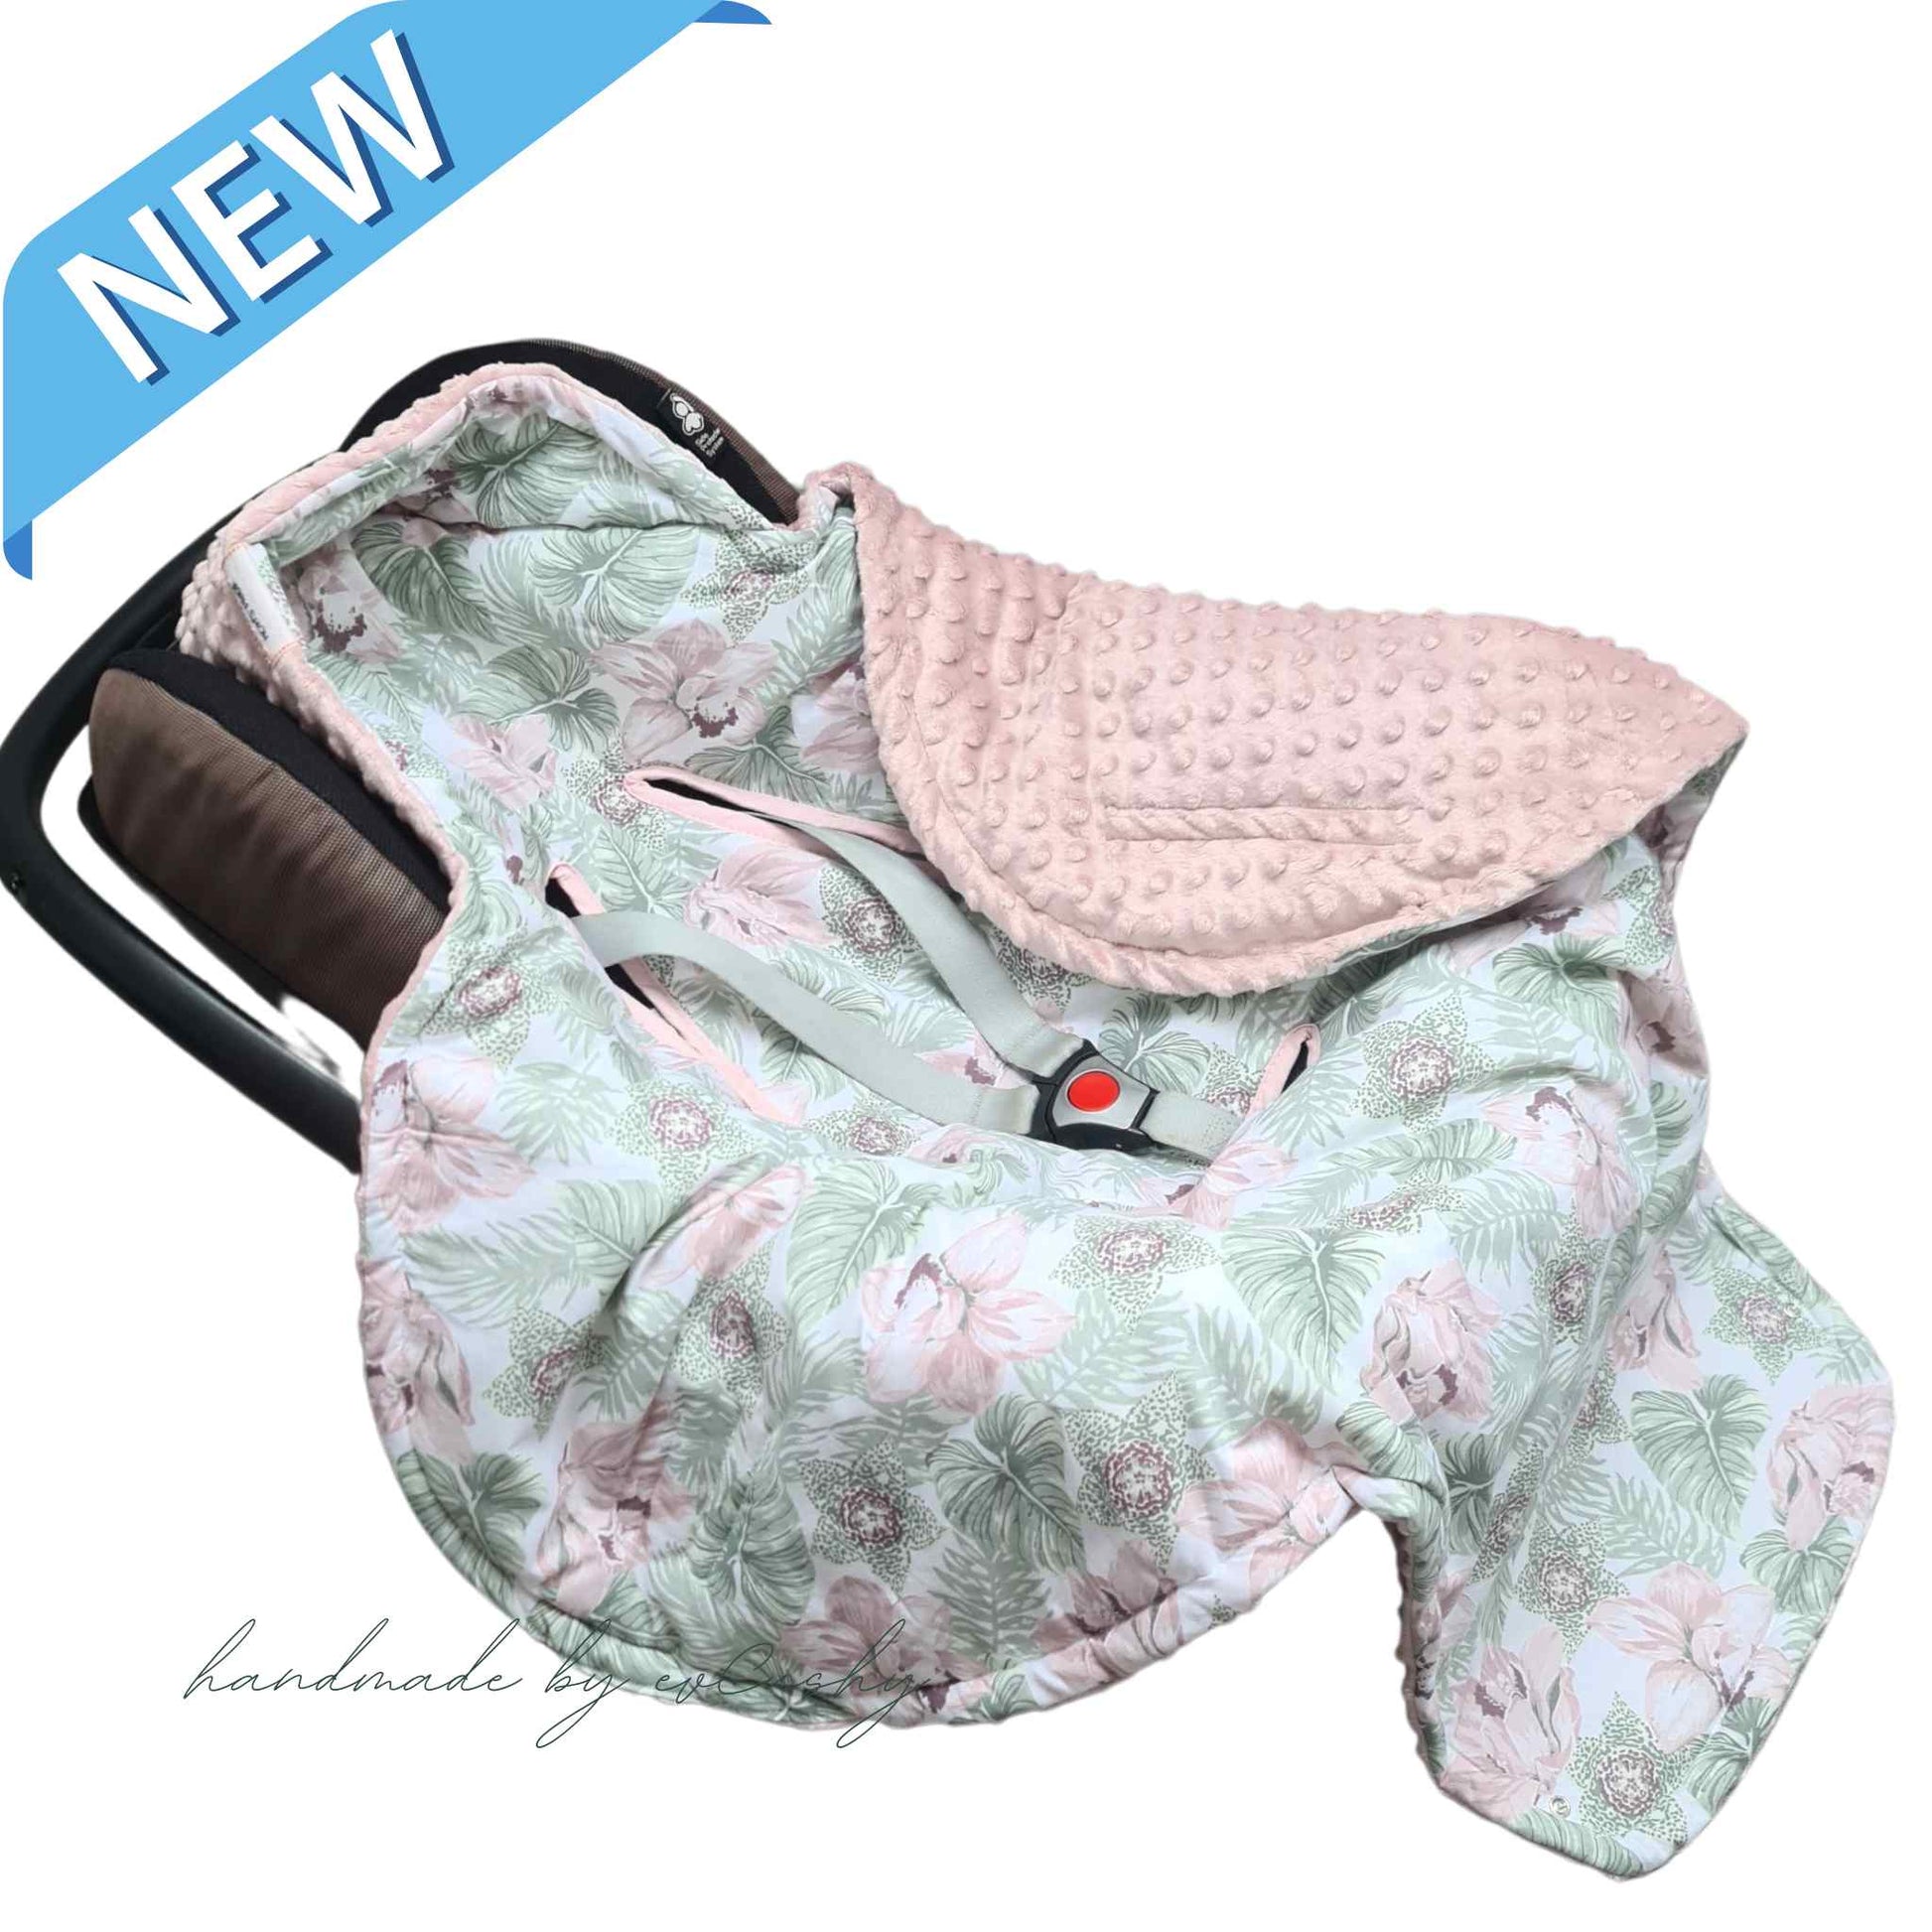 universal car seatbblaket for baby girl newborn till 12 months pink 